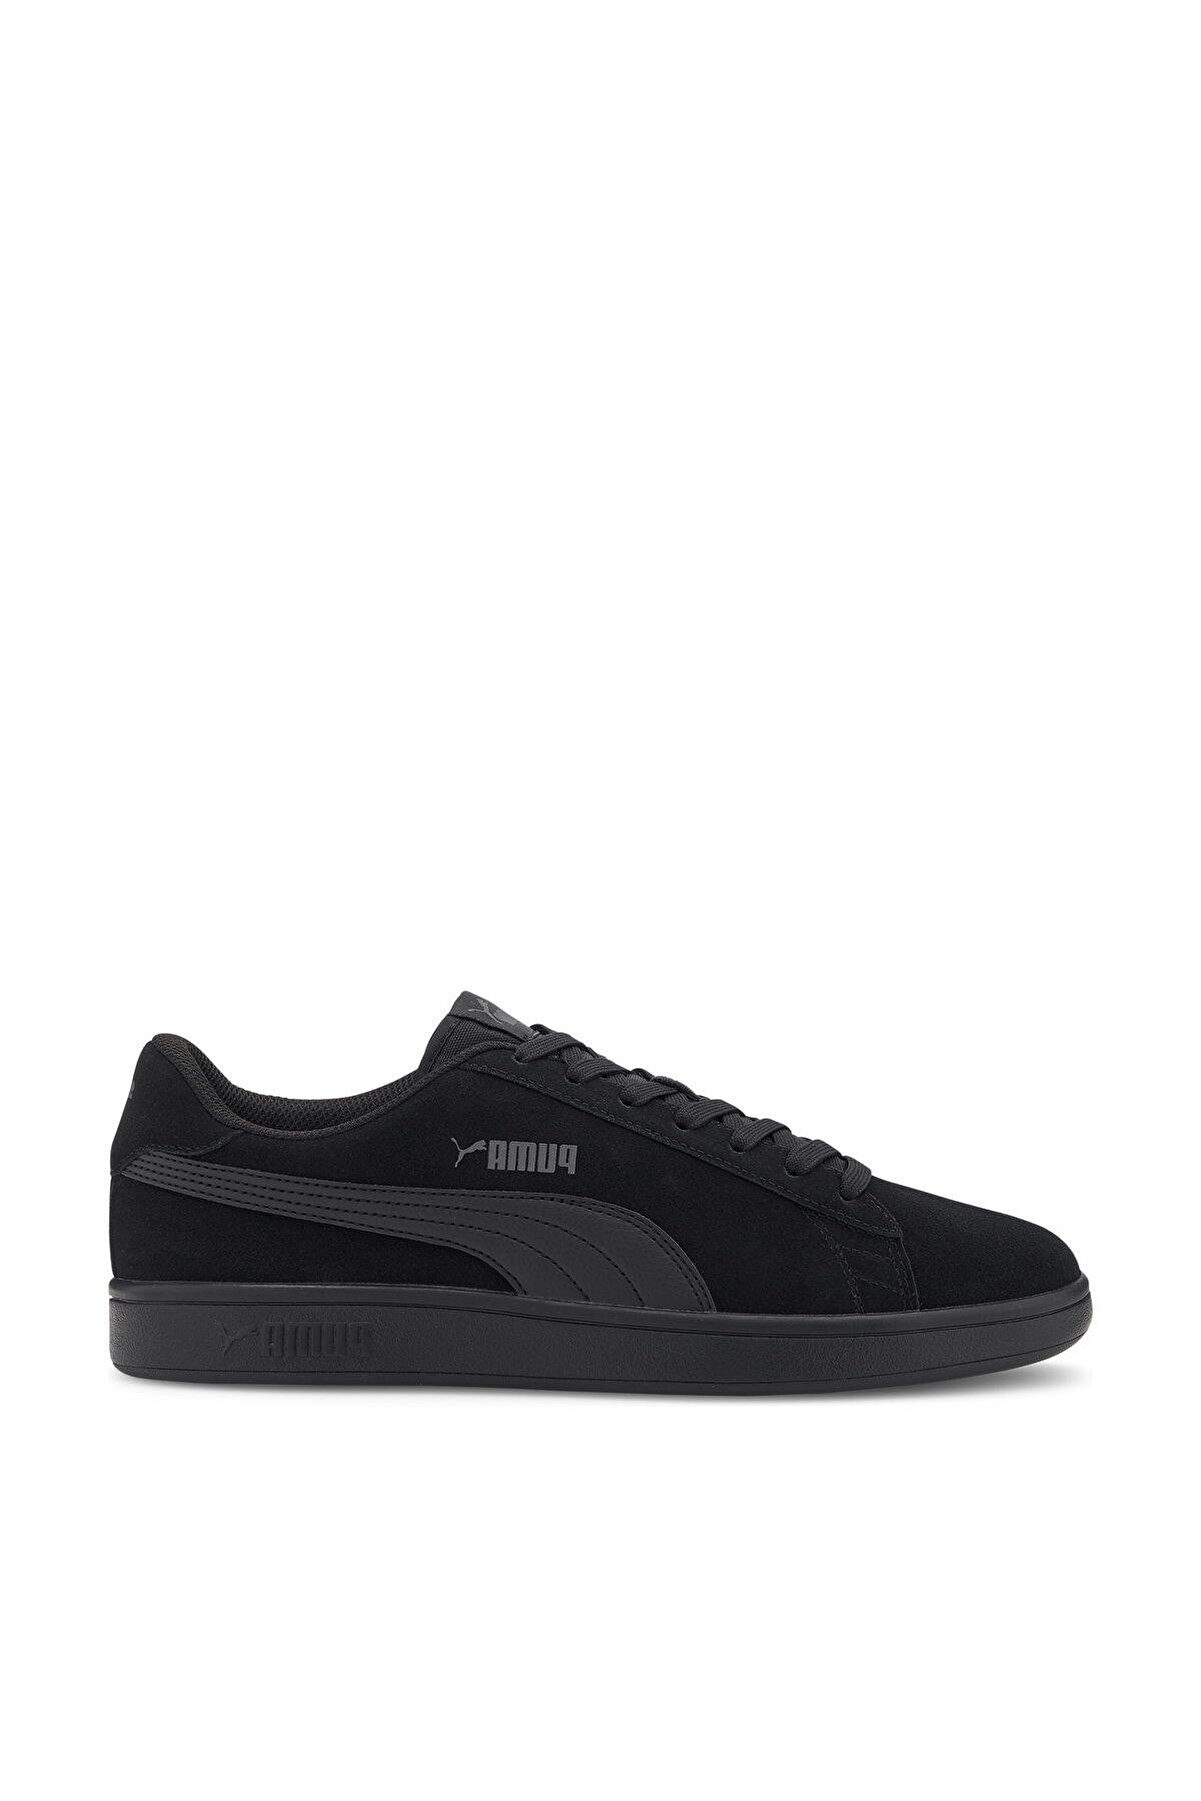 Puma SMASH V2 Siyah Erkek Sneaker Ayakkabı 100547121